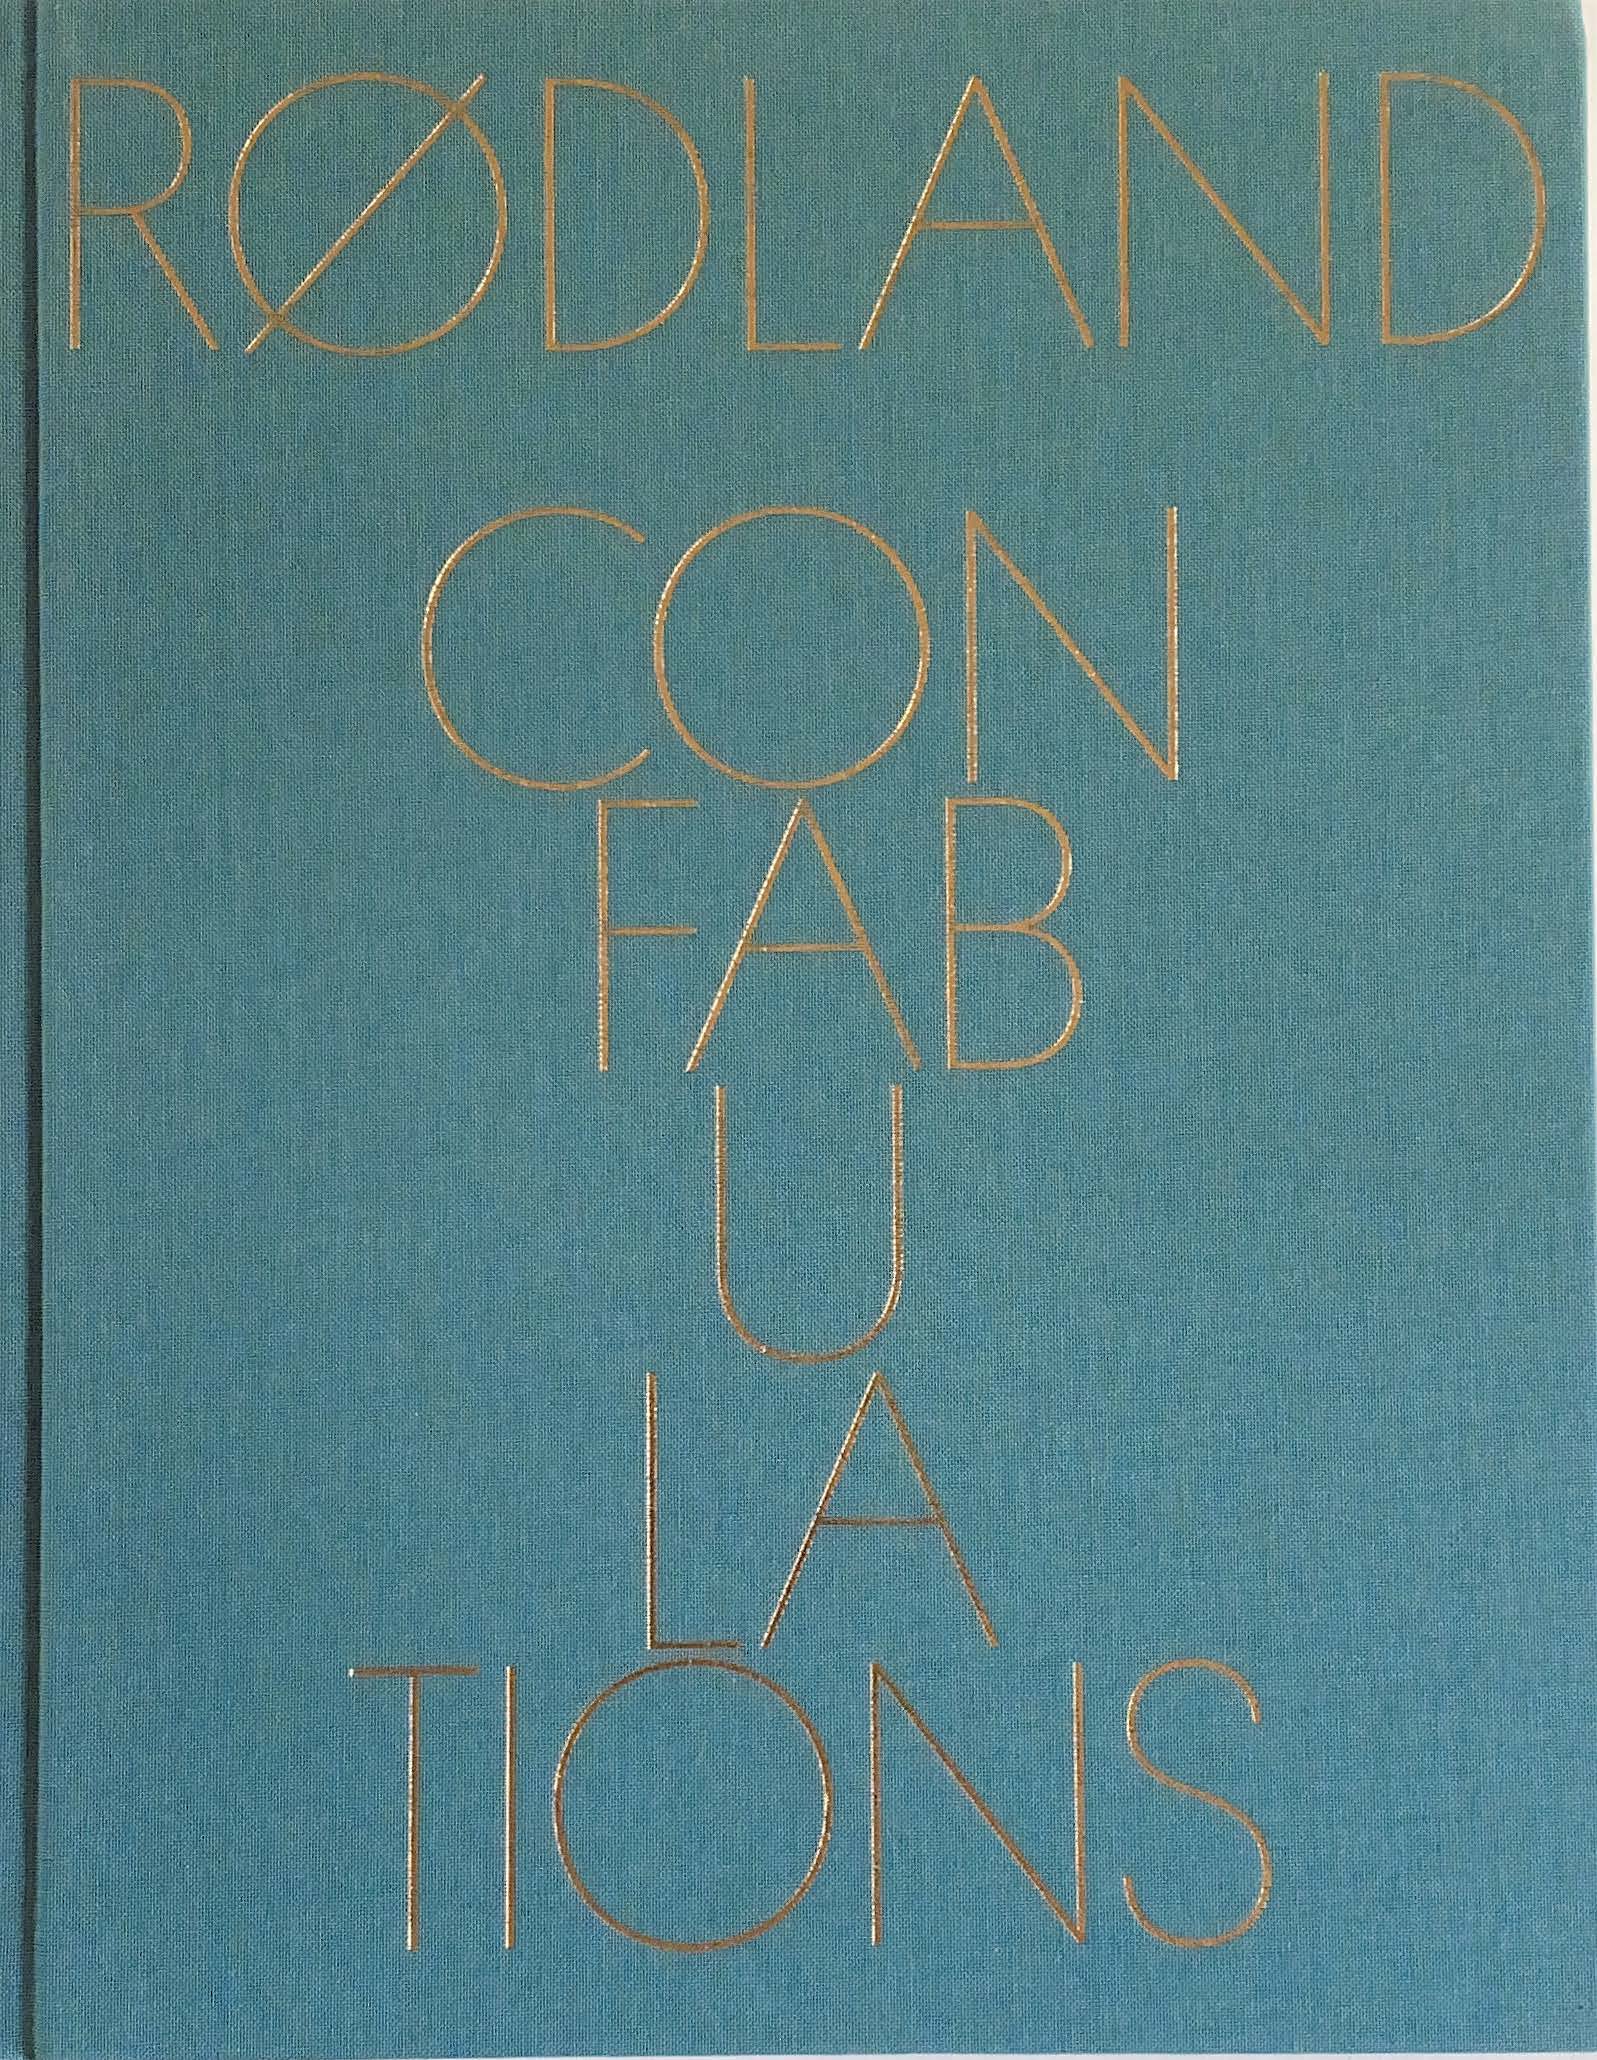 Rodland Confabulations